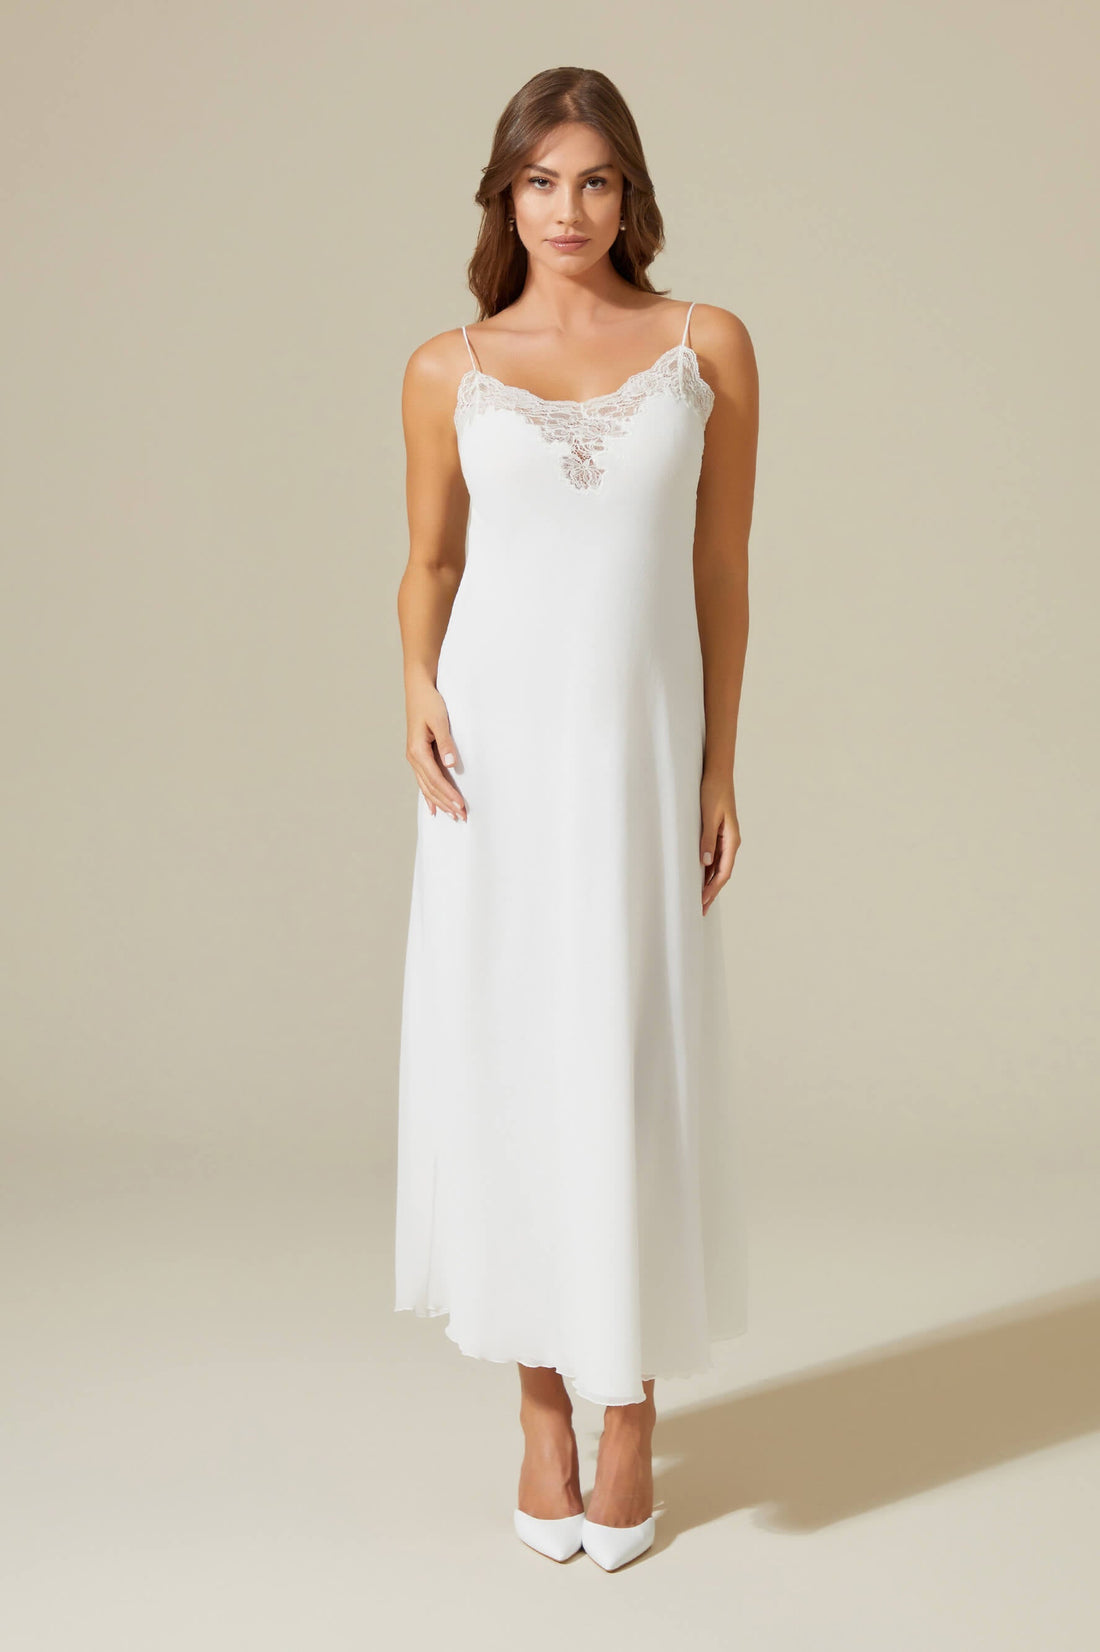 100% Cotton Nightgown Grecian Empire Bodice Full Sweep Bridal Lingerie  Wedding Nightgown Bridal Sleepwear White and Prints Cotton Sleepwear -   Canada